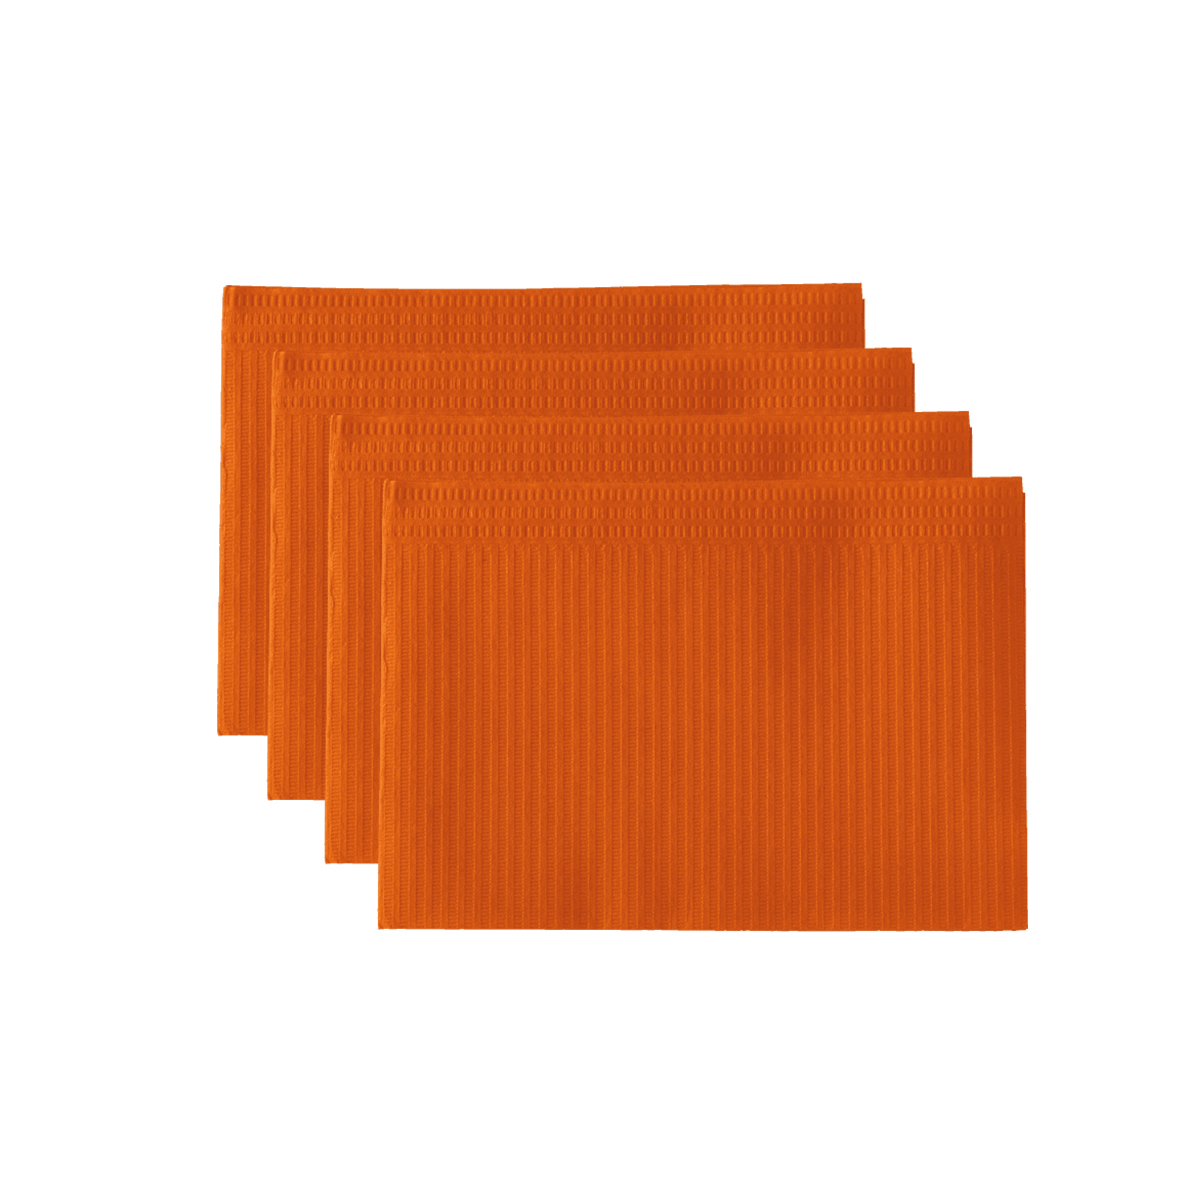 Monoart Patientenservietten Towel UP Farbe: orange (Euronda)